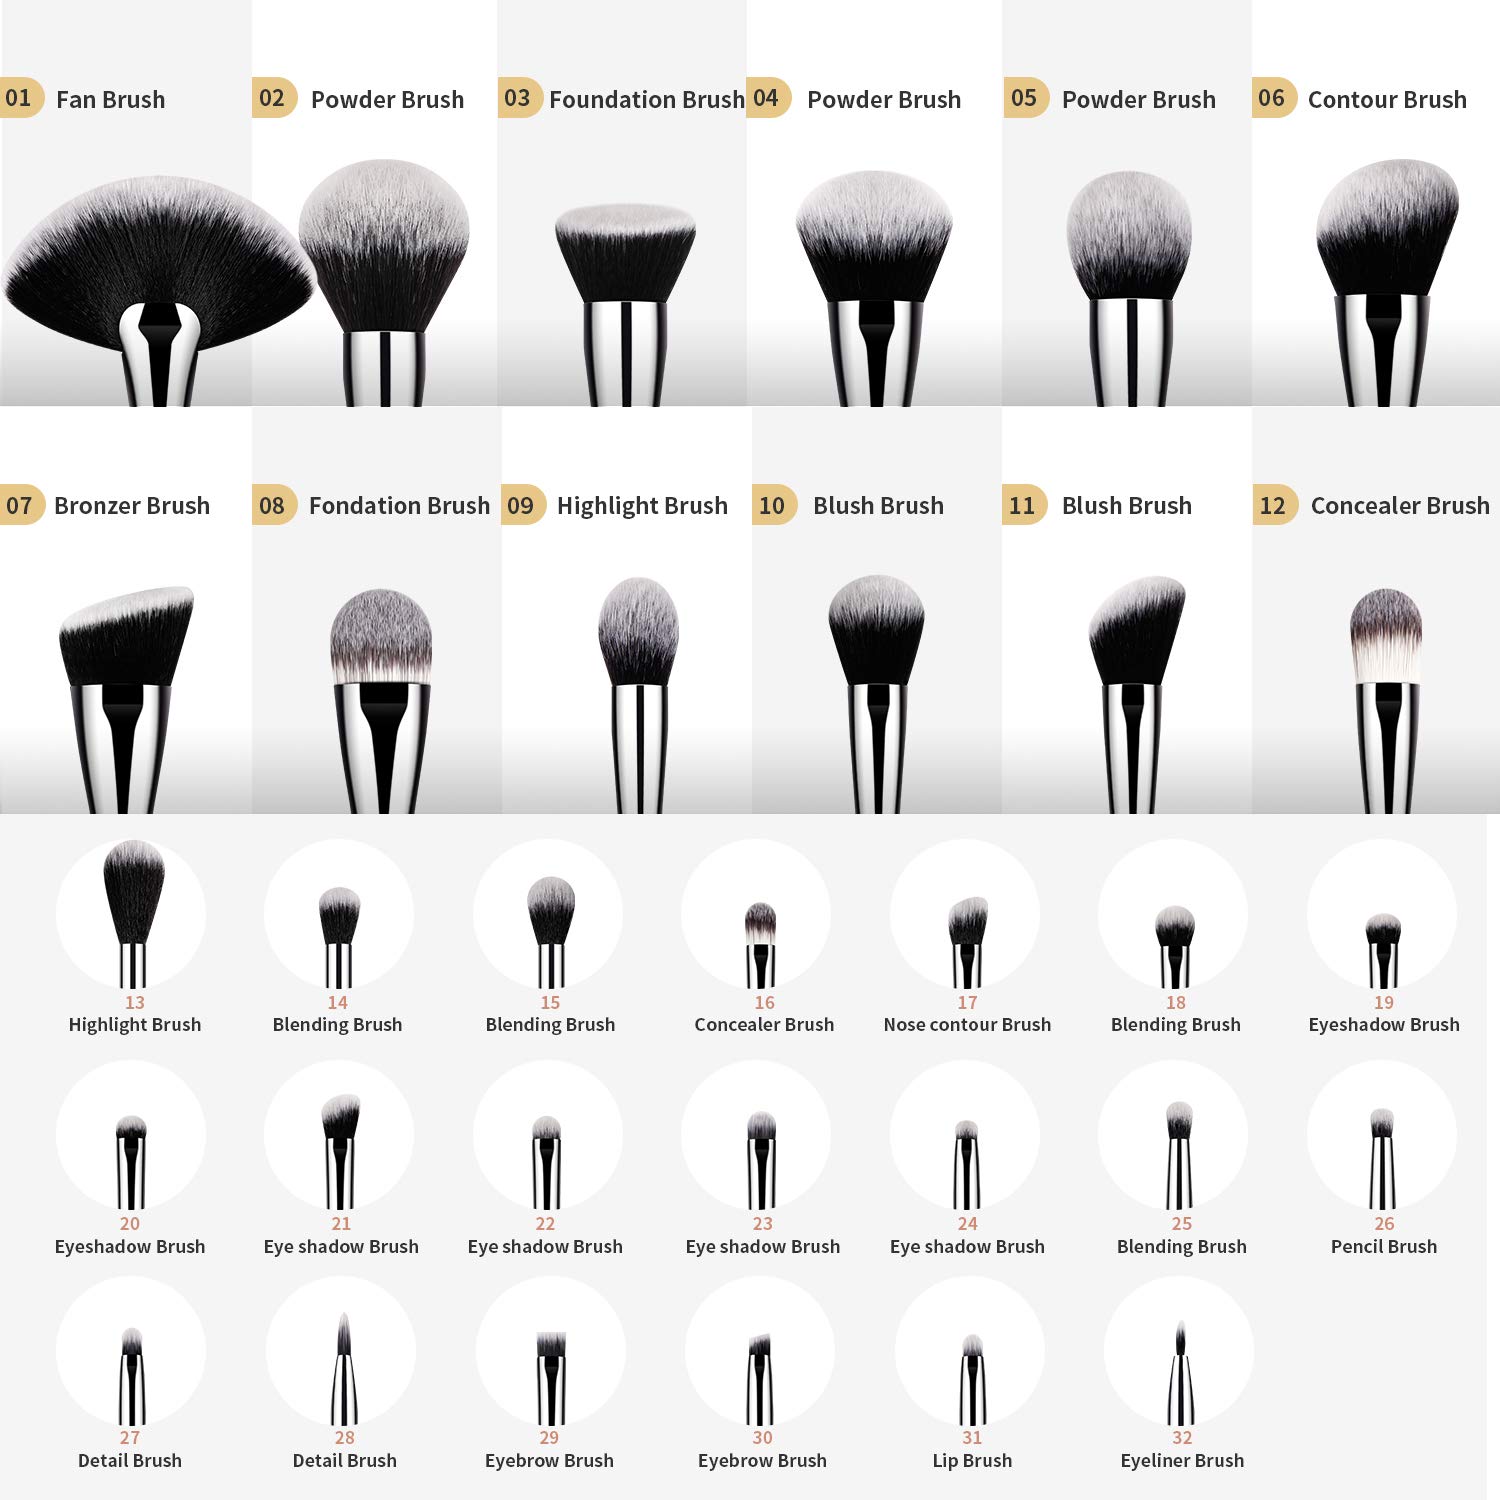 DUcare Makeup Brushes Professional 32Pcs Make up Brushes Set Premium Synthetic Kabuki Foundation Blending Brush Face Powder Blush Concealers Eye Shadows